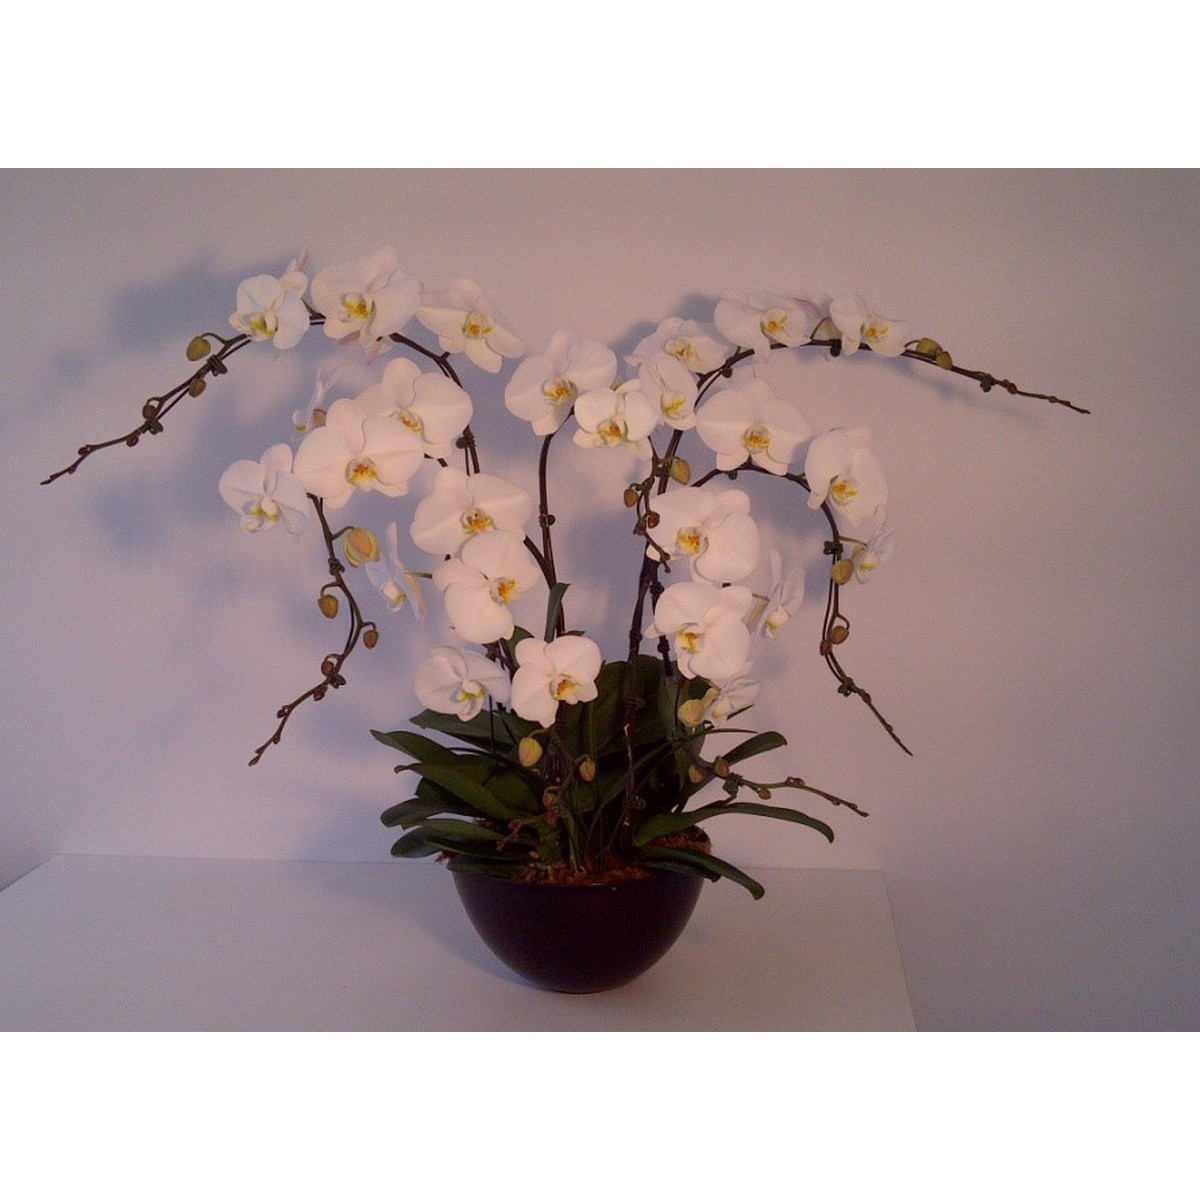   Phalaenopsis Prestige  7 tiges avec contenant